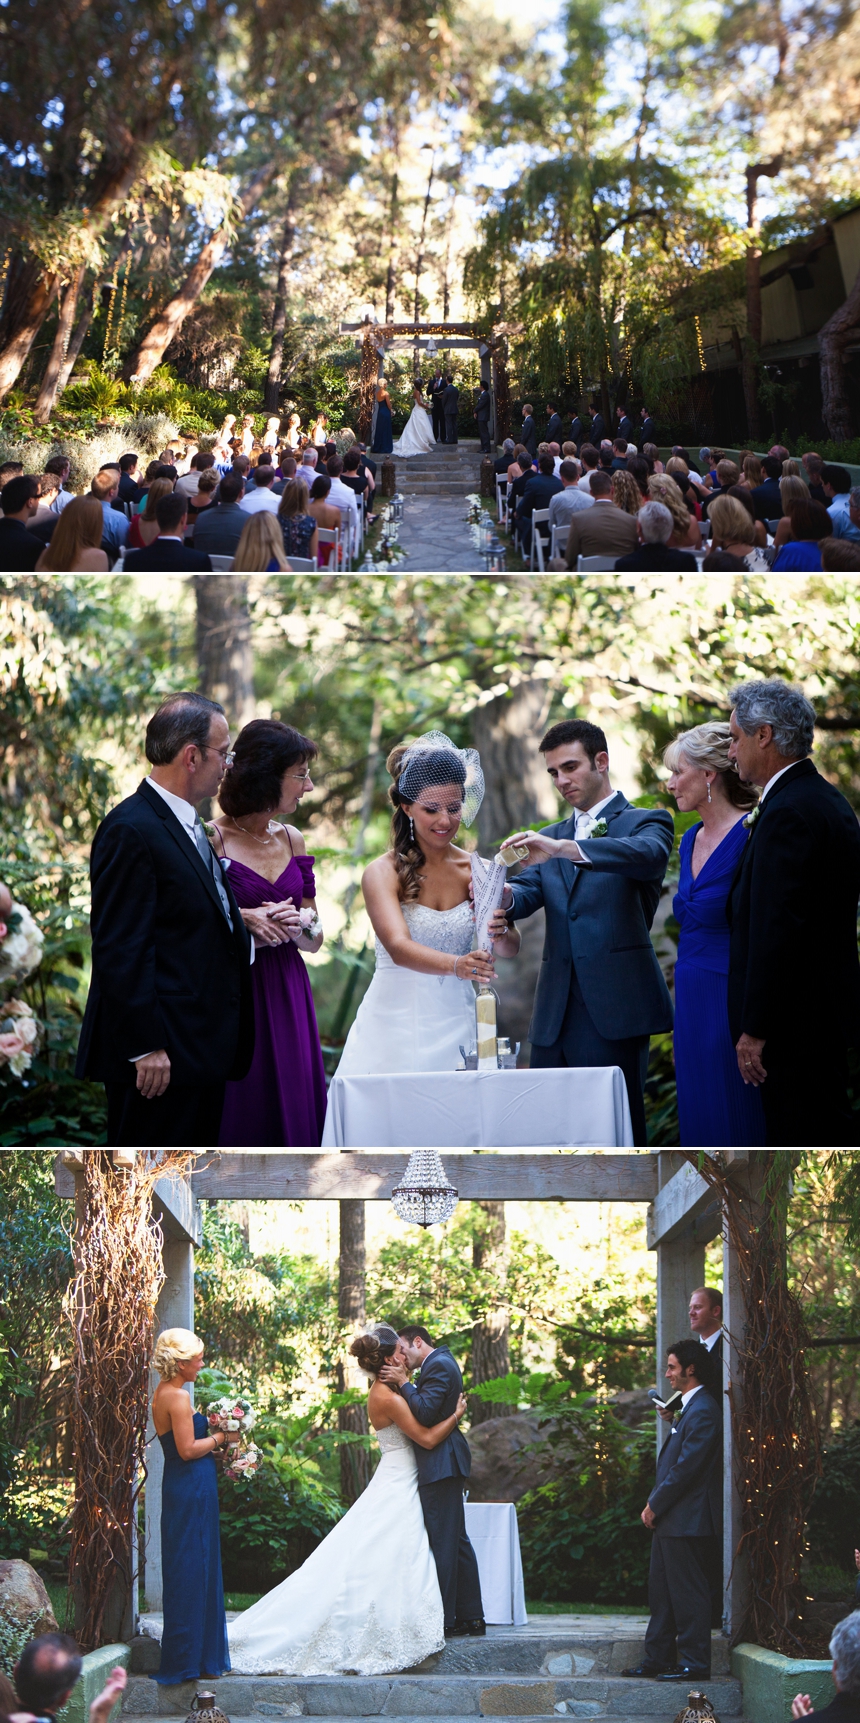 Los Angeles wedding ceremony photos